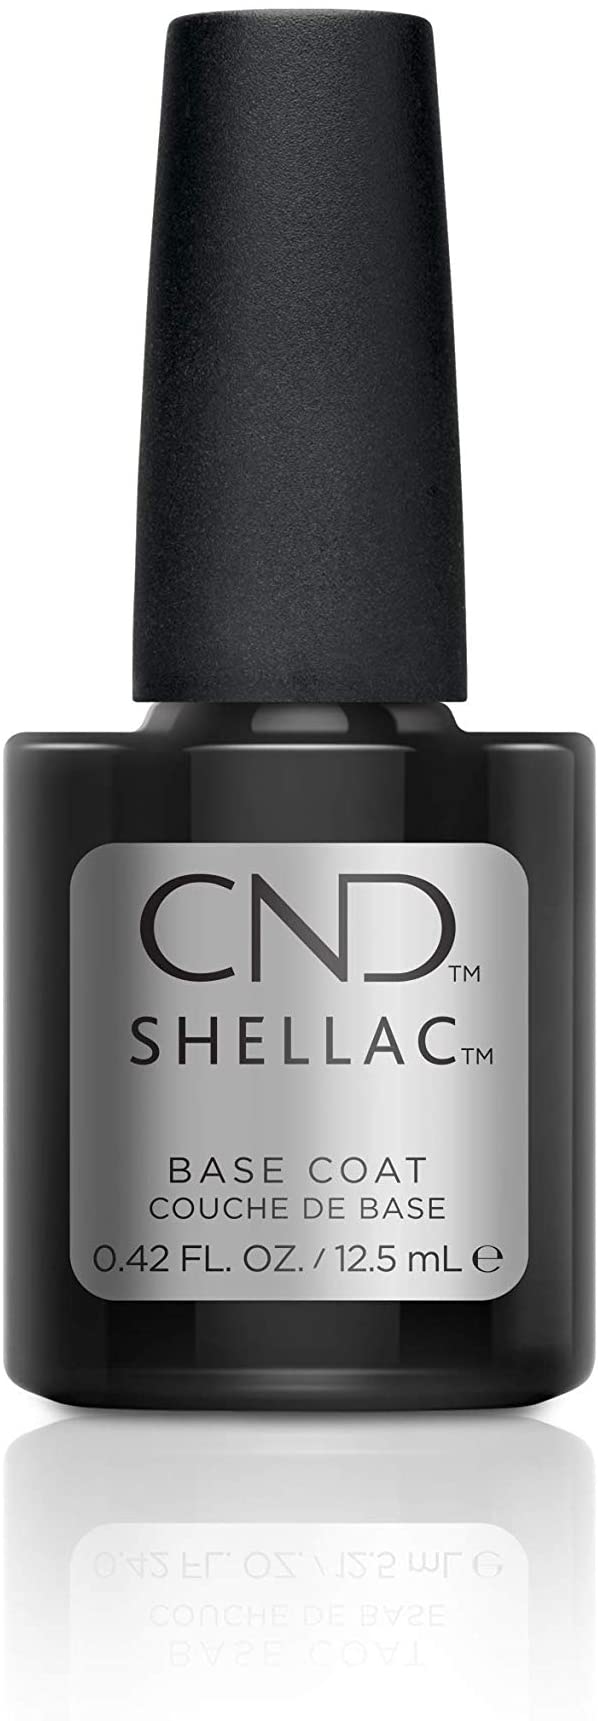 CND Shellac Base Coat (12.5ml)